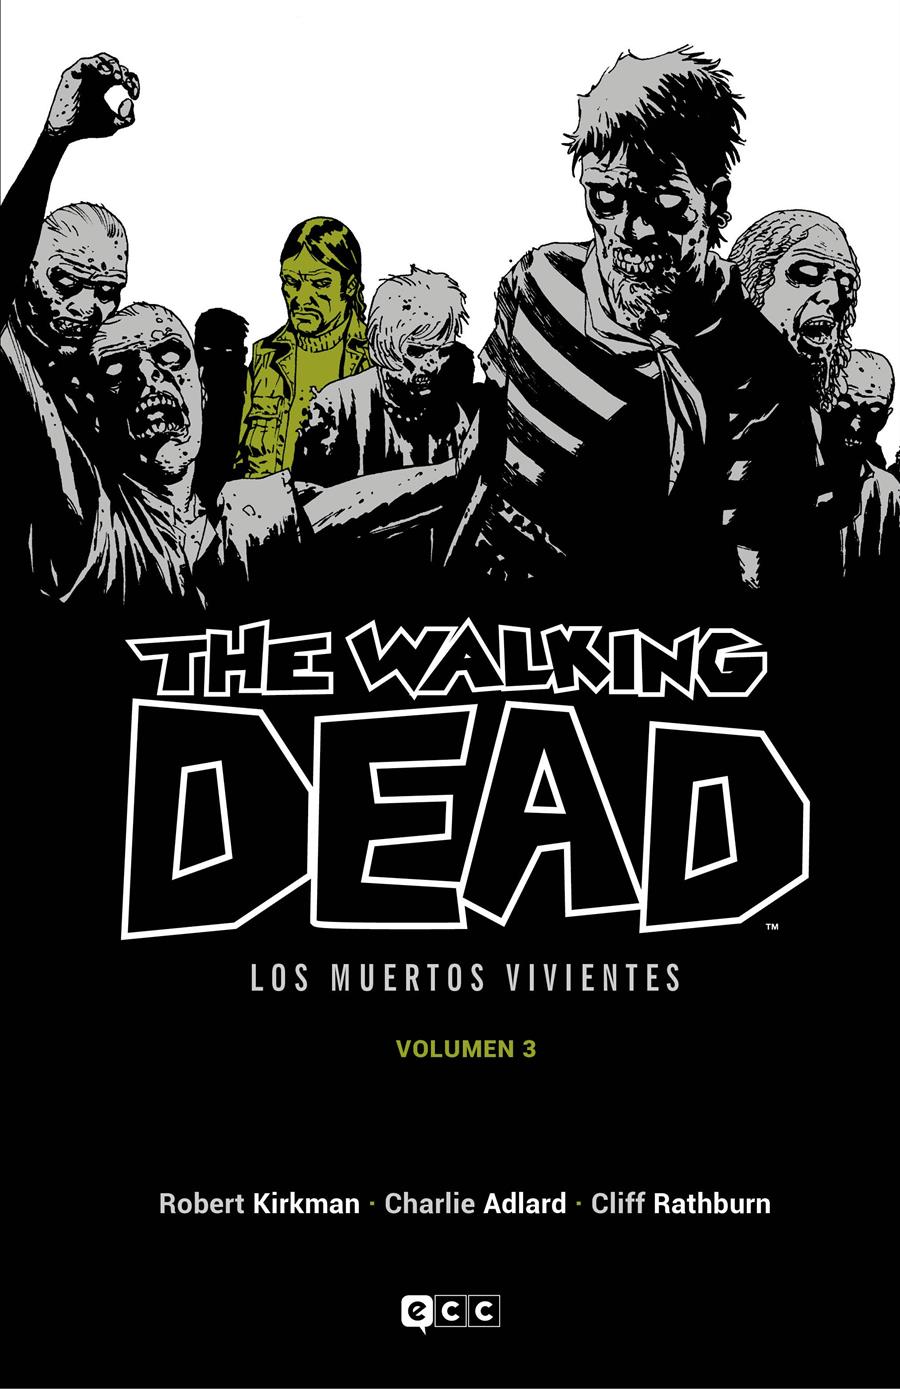 The Walking Dead (Los muertos vivientes) vol. 03 de 16 | N0521-ECC58 | Charlie Adlard / Robert Kirkman | Terra de Còmic - Tu tienda de cómics online especializada en cómics, manga y merchandising